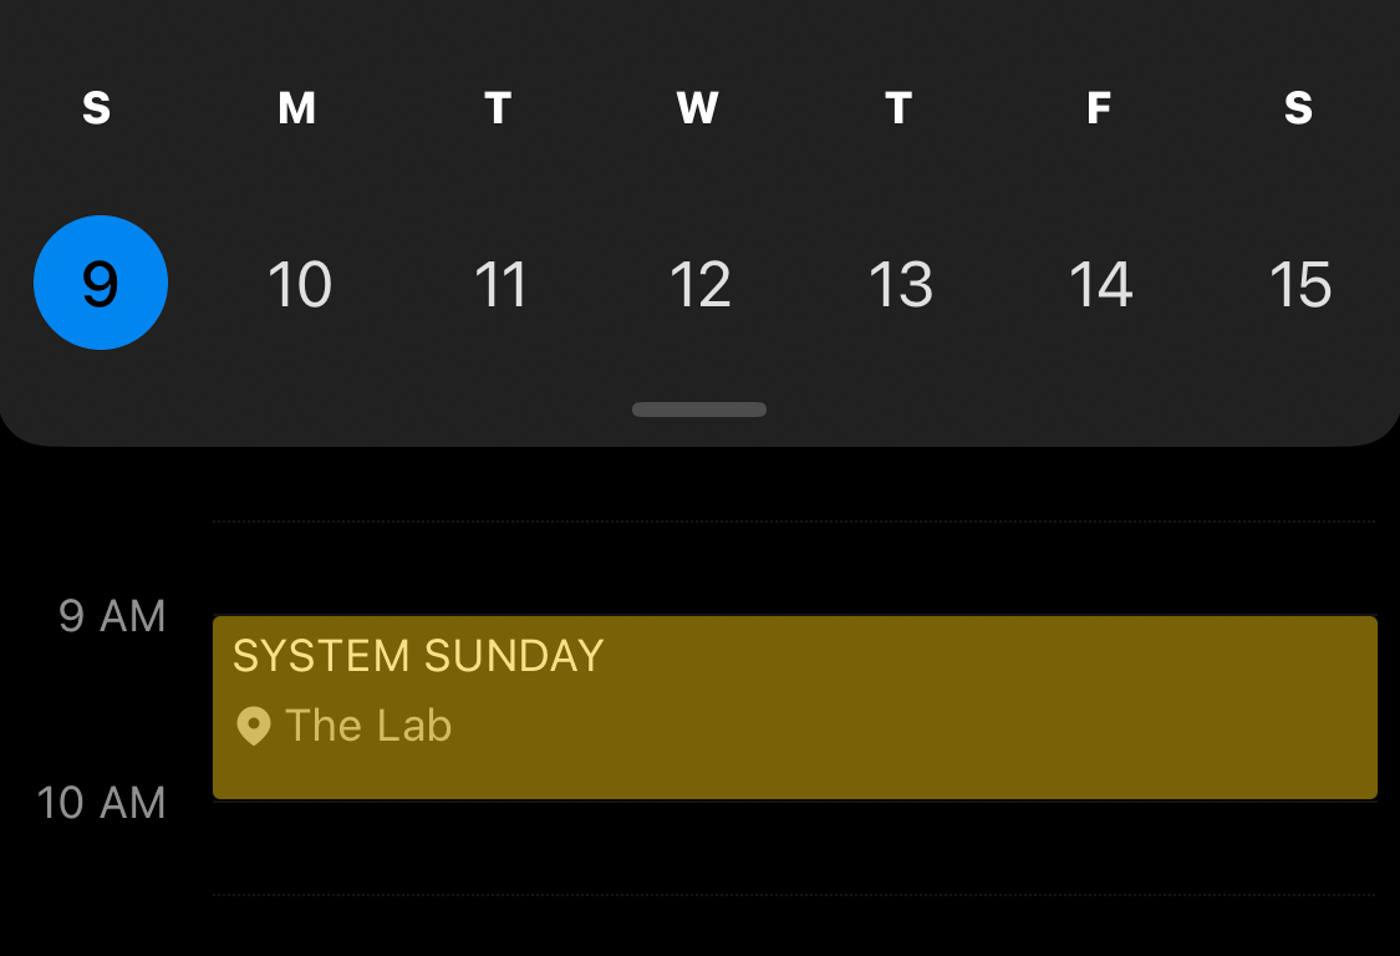 System Sunday Calendar invite